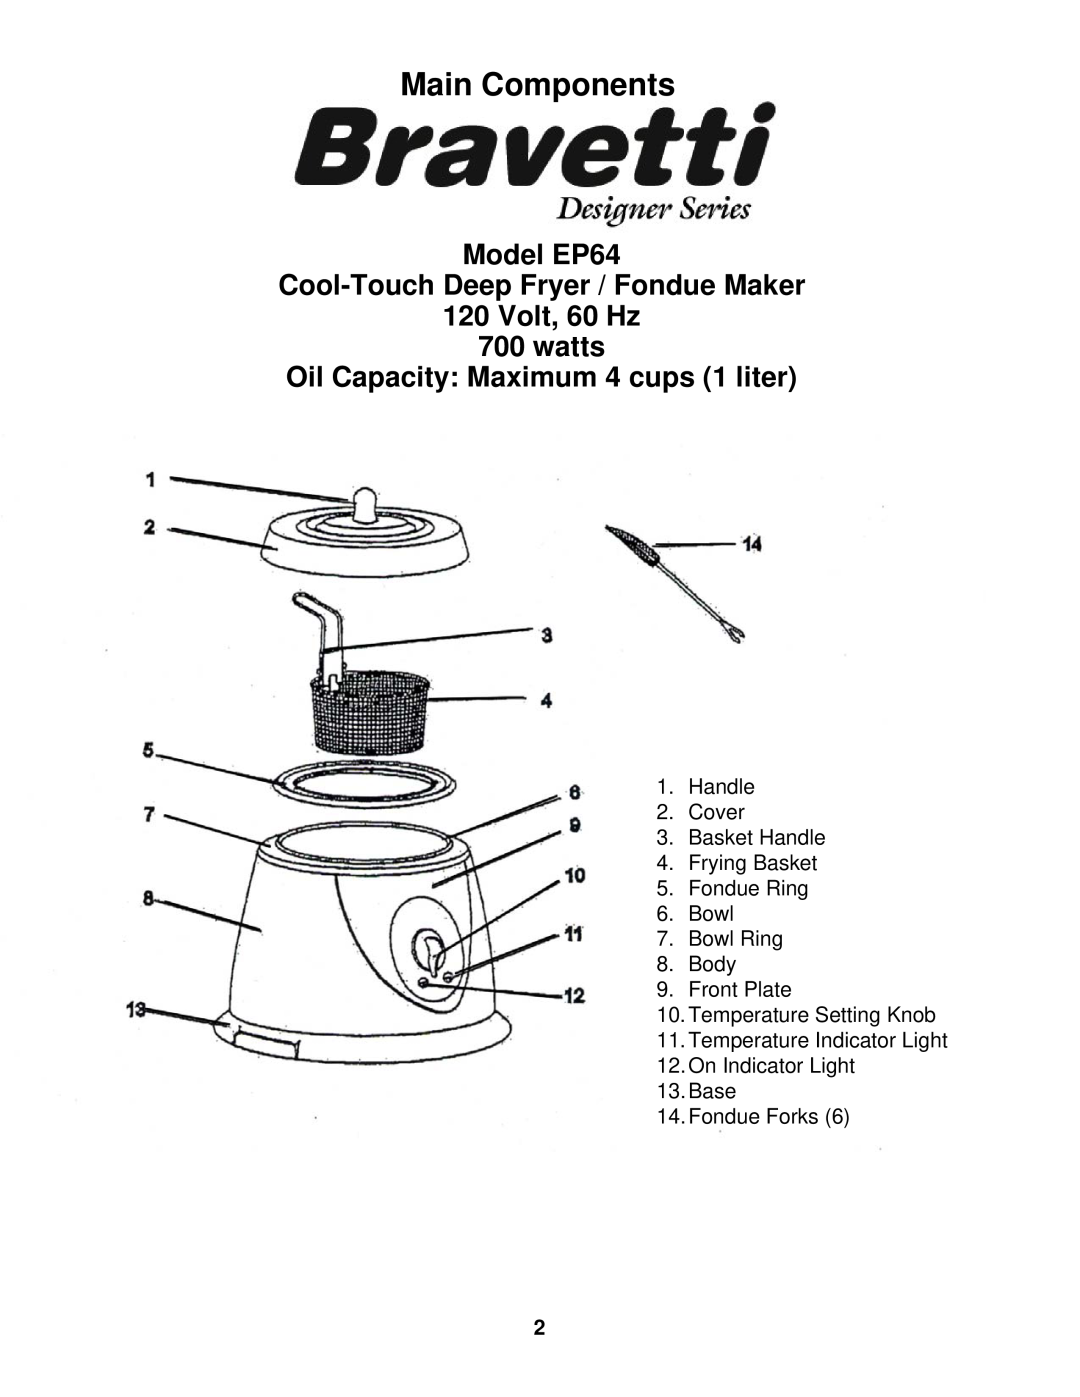 Bravetti manual Main Components, Model EP64 Cool-TouchDeep Fryer / Fondue Maker, Volt, 60 Hz 700 watts 